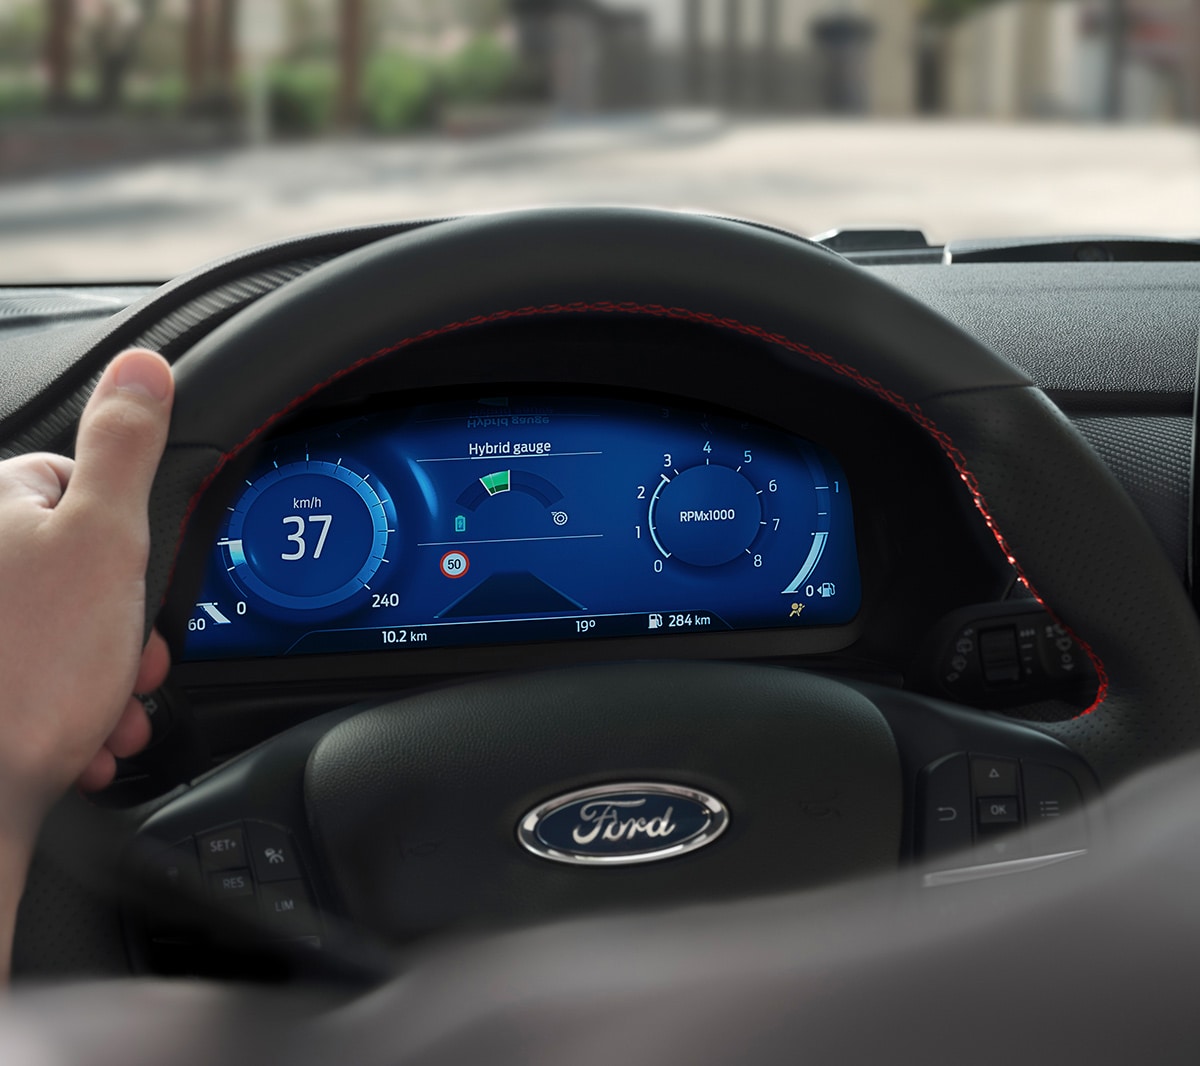 Ford Fiesta interior digital cluster view